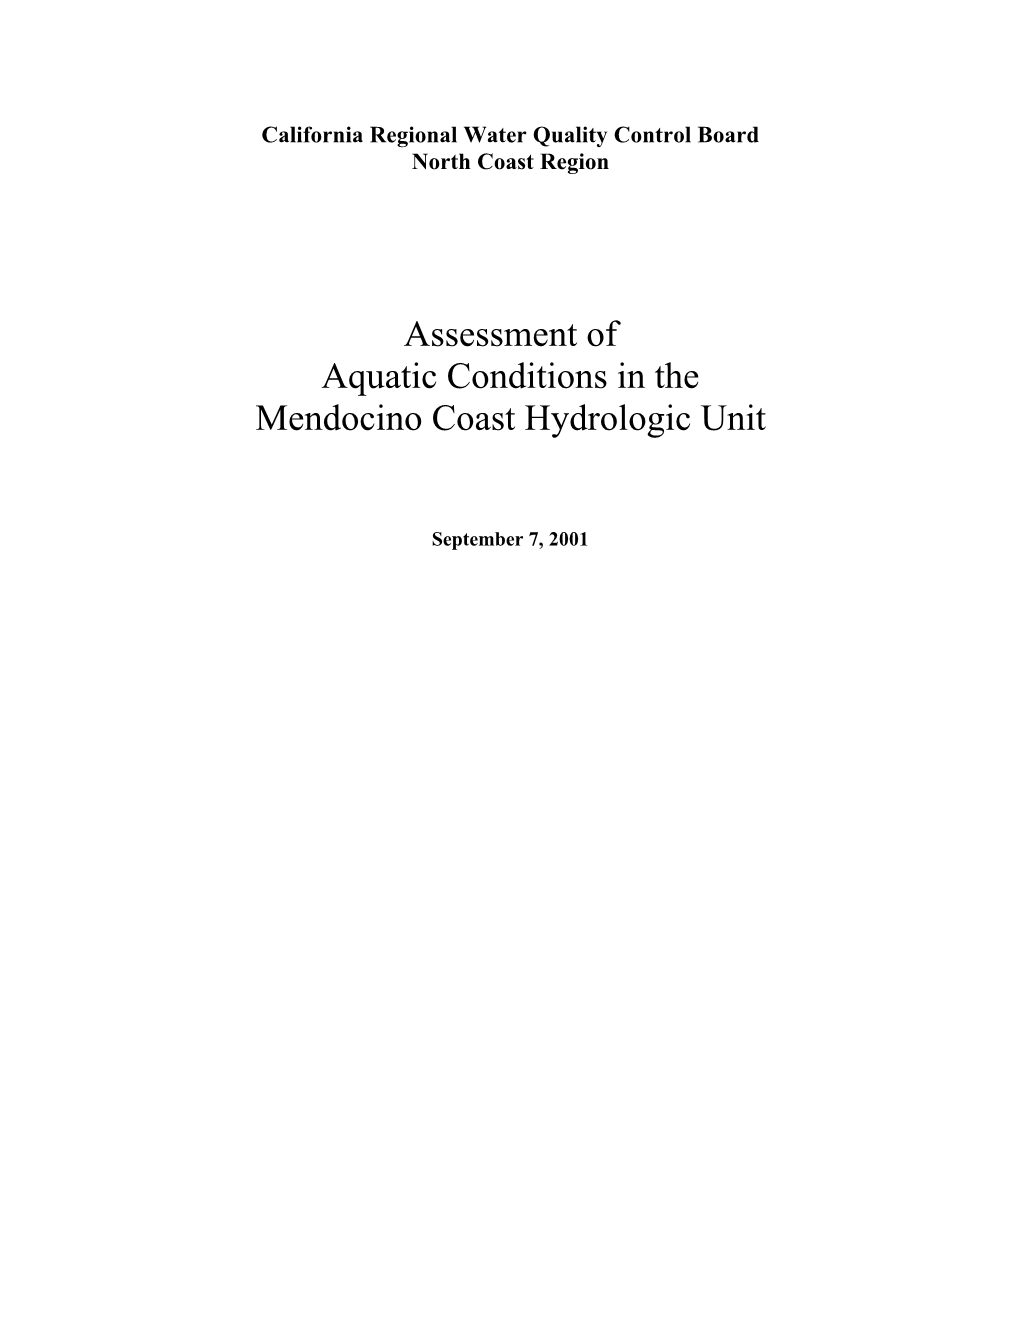 Assessment of Aquatic Conditions in the Mendocino Coast Hydrologic Unit